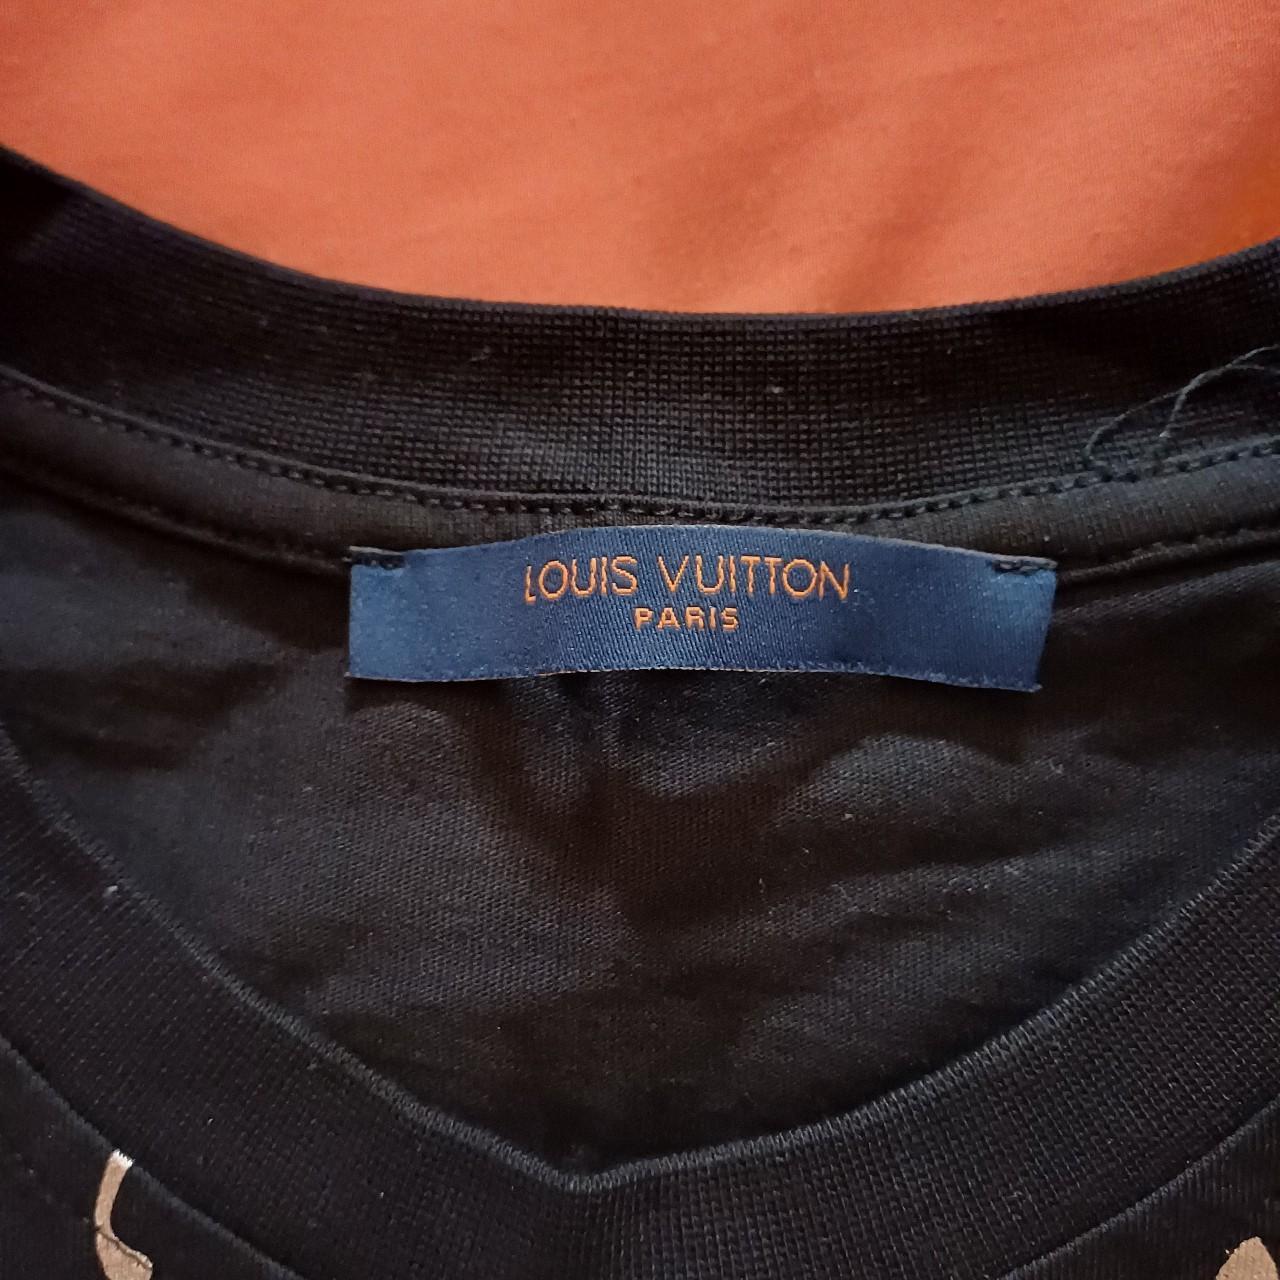 All-over branding Louis Vuitton tshirt Open to - Depop